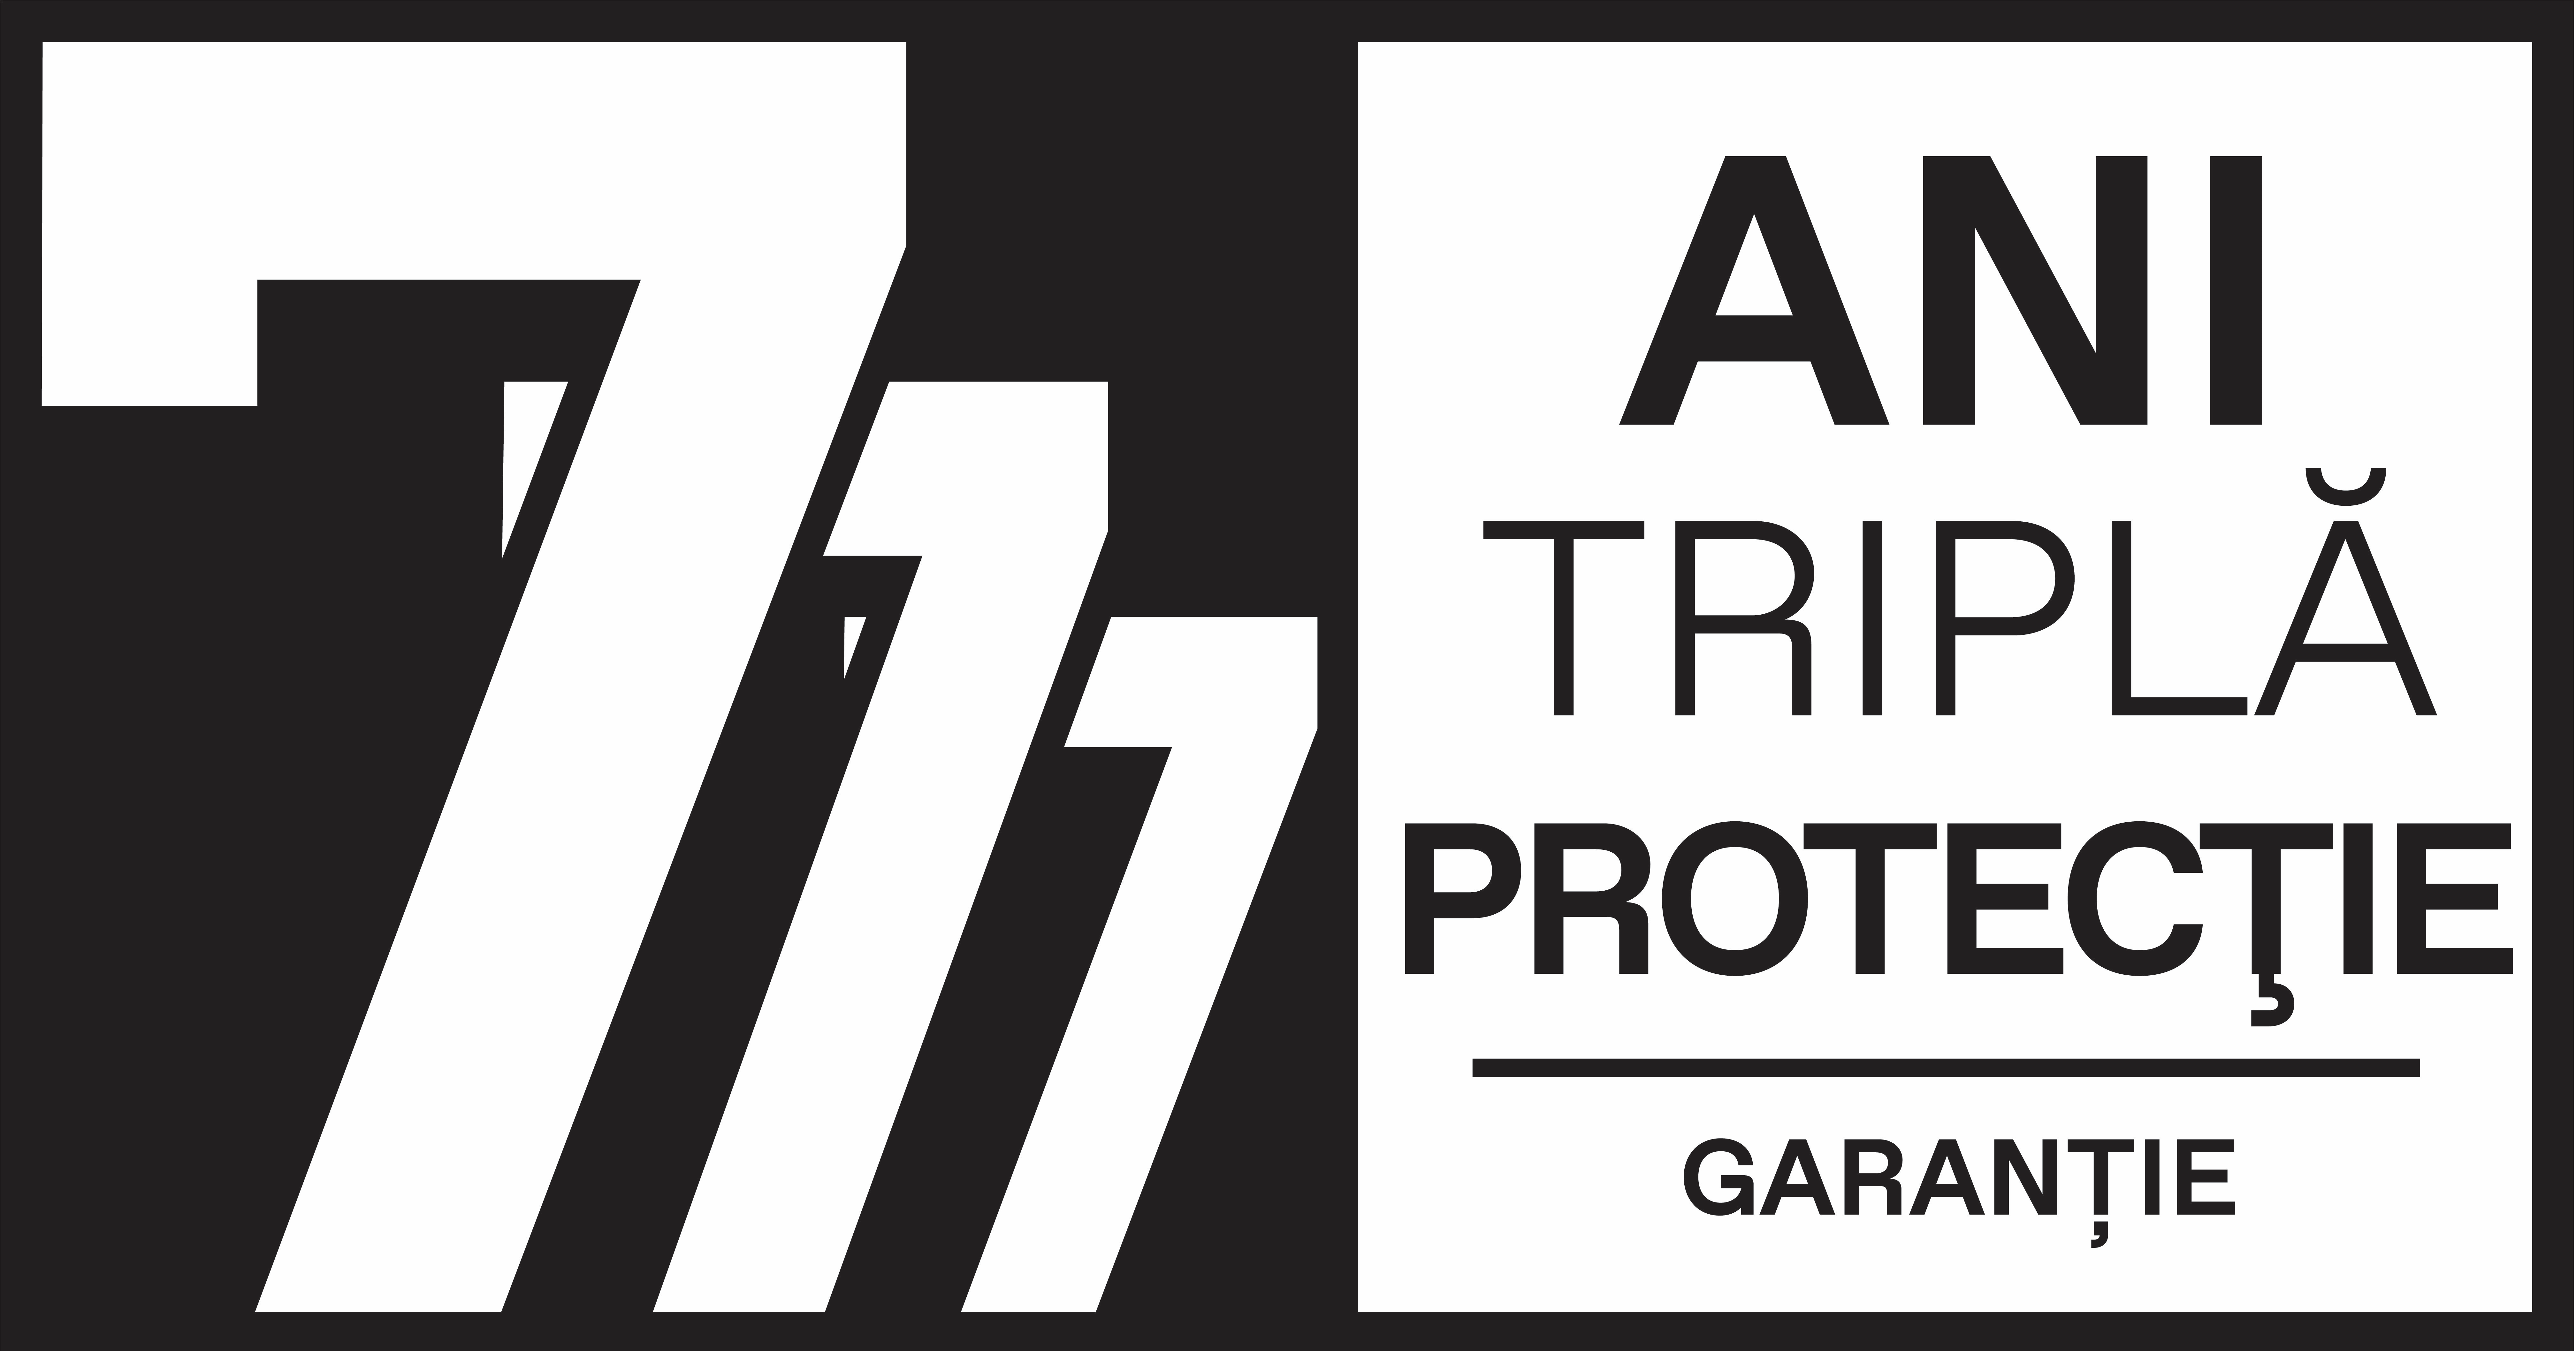 MG_Triple7_logo 01